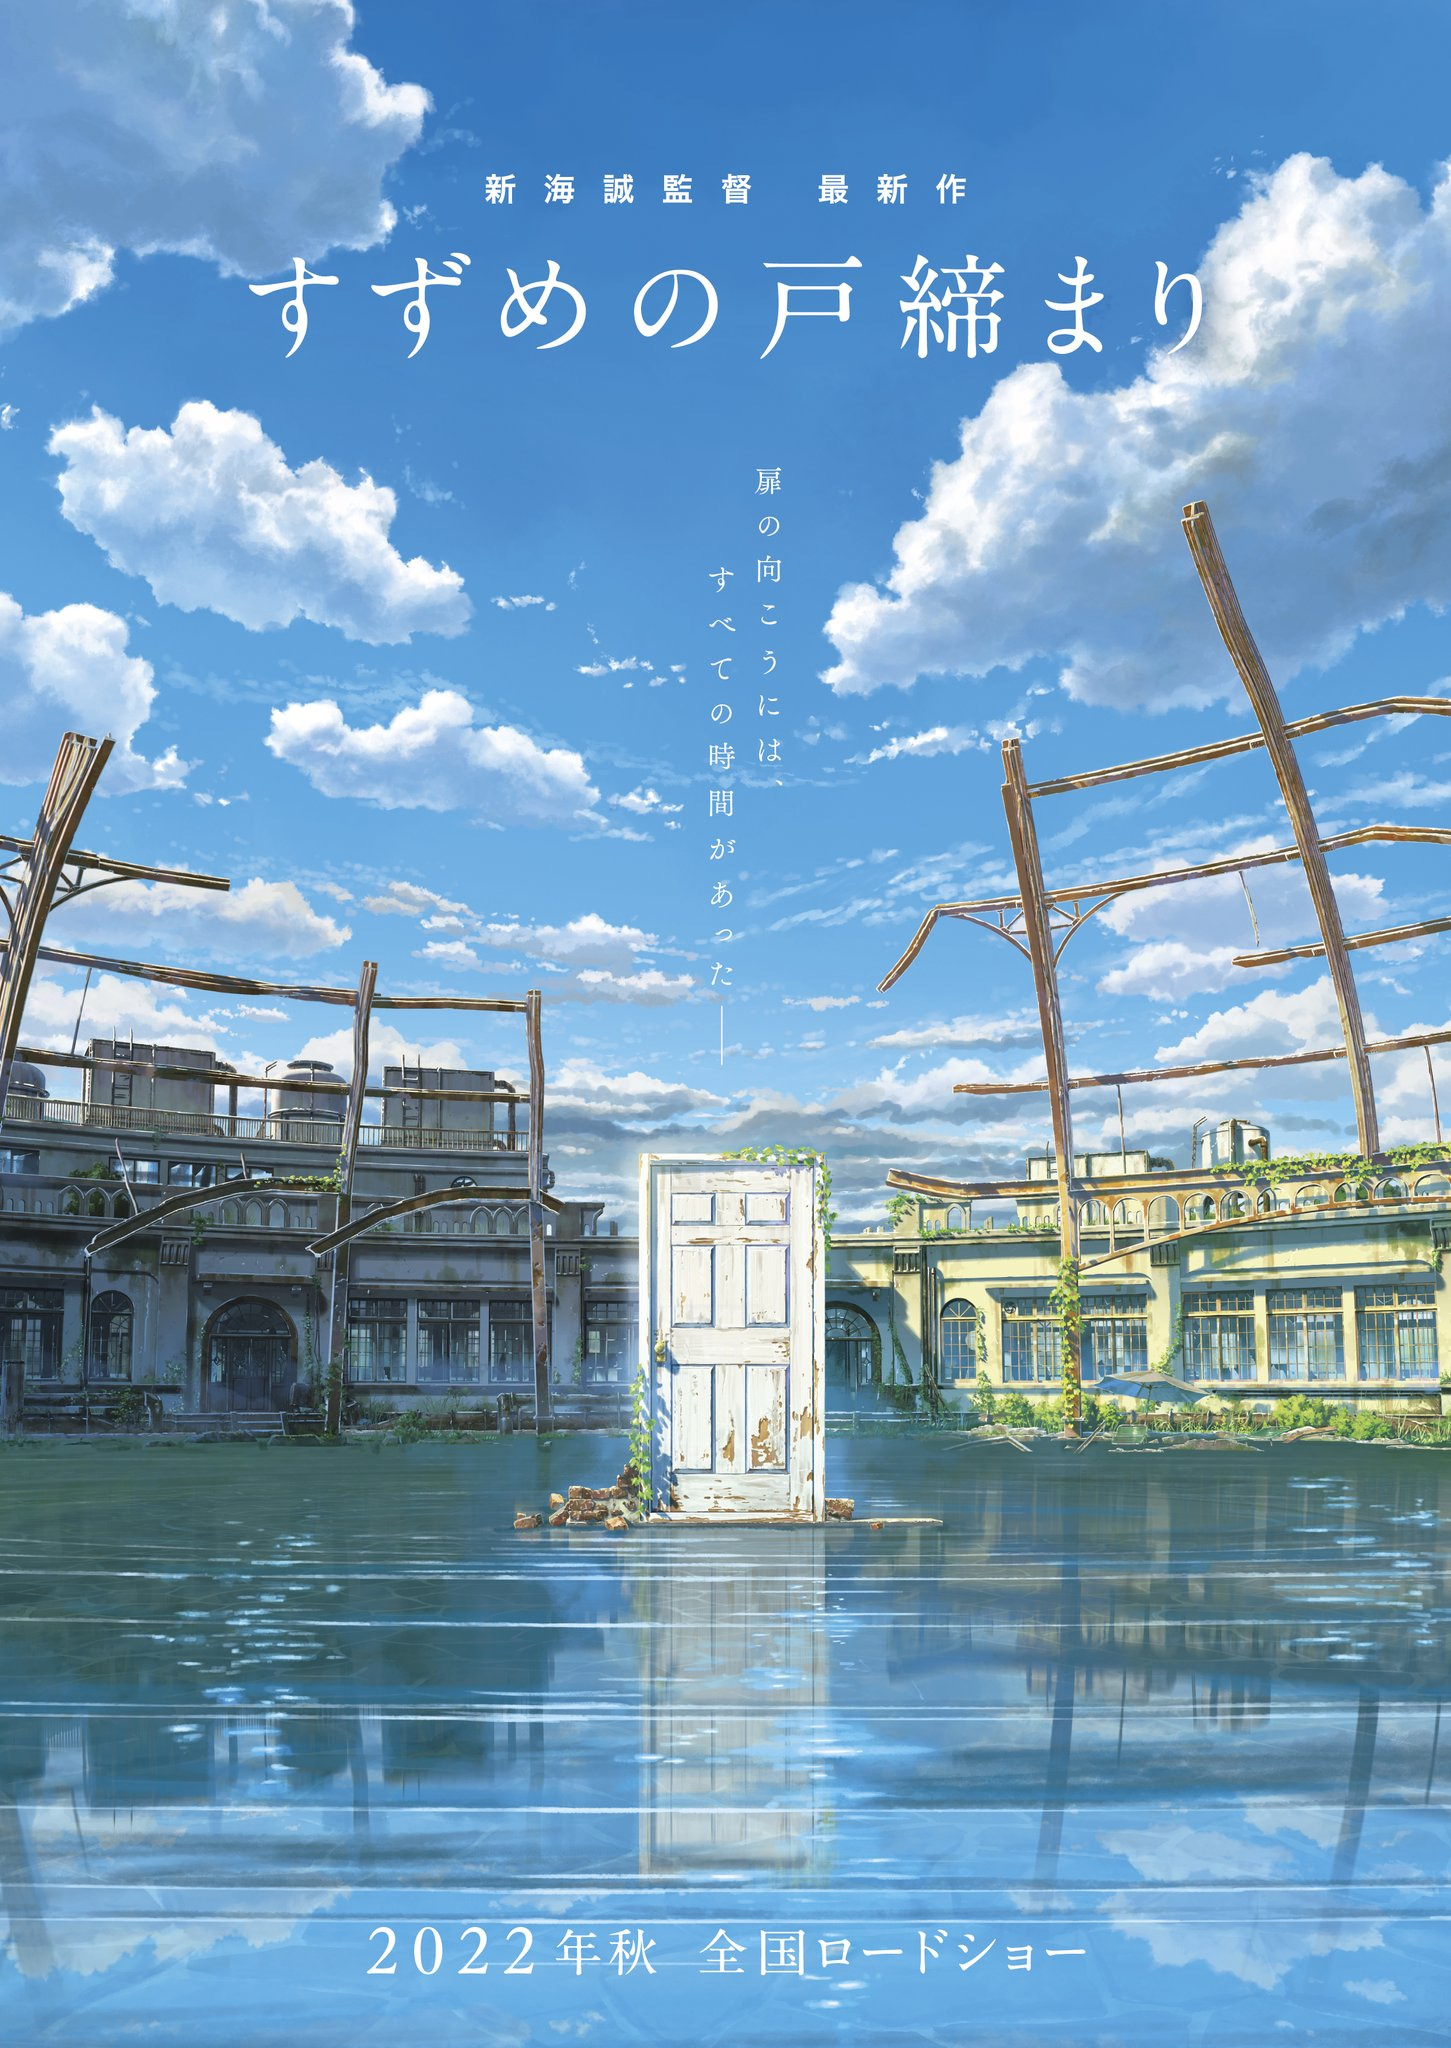 Mega Sized Movie Poster Image for Suzume no tojimari 